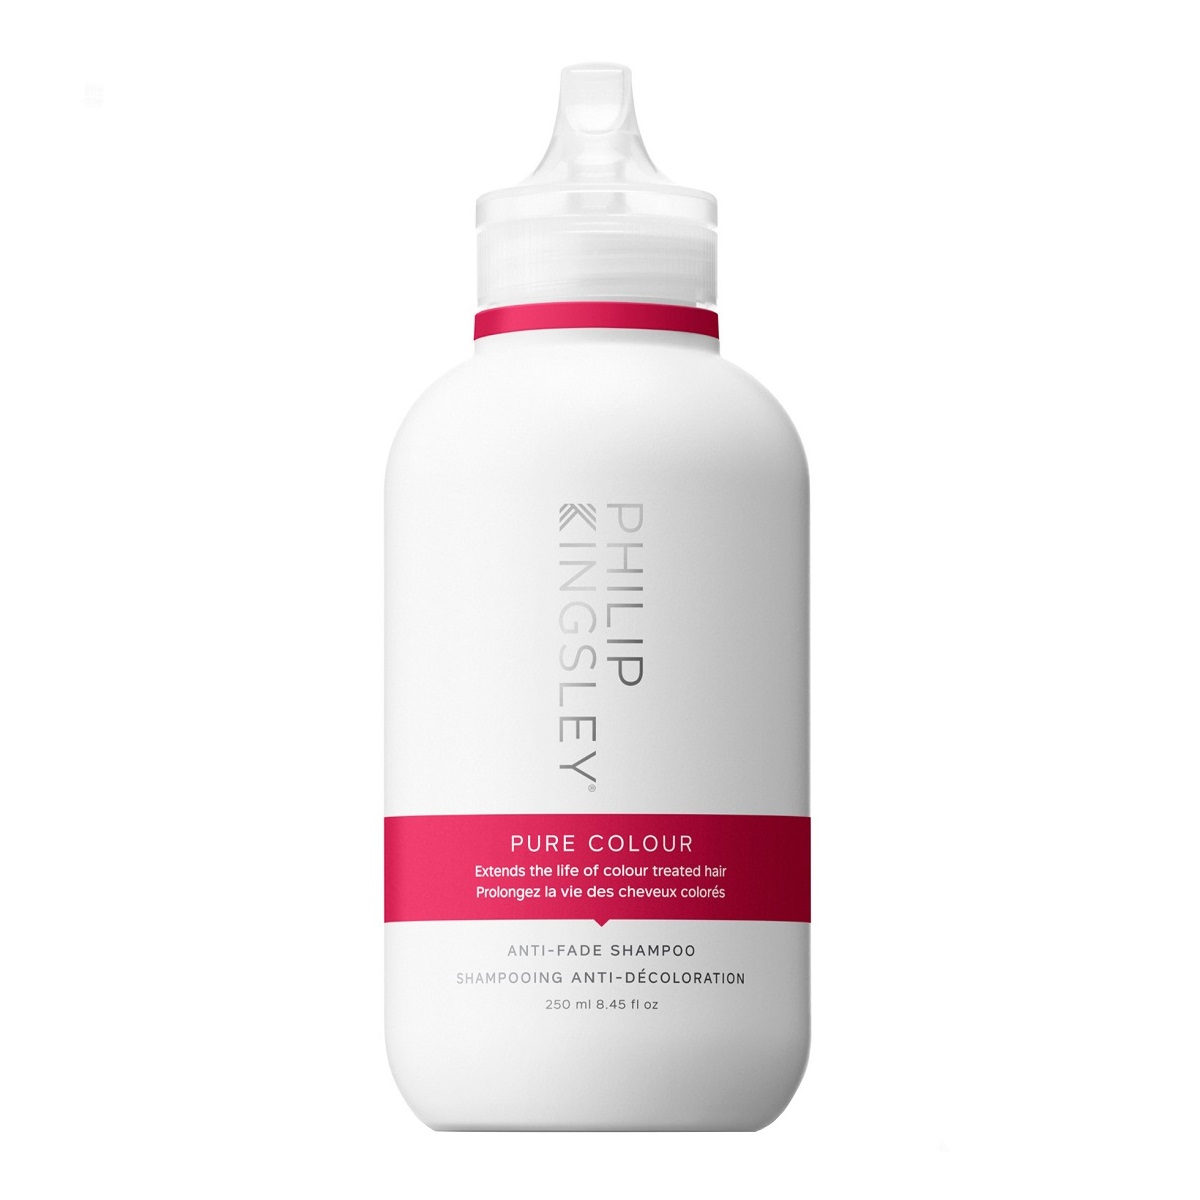 Philip Kingsley Бессульфатный шампунь для окрашенных волос Anti-Fade Shampoo, 250 мл (Philip Kingsley, Pure Colour)